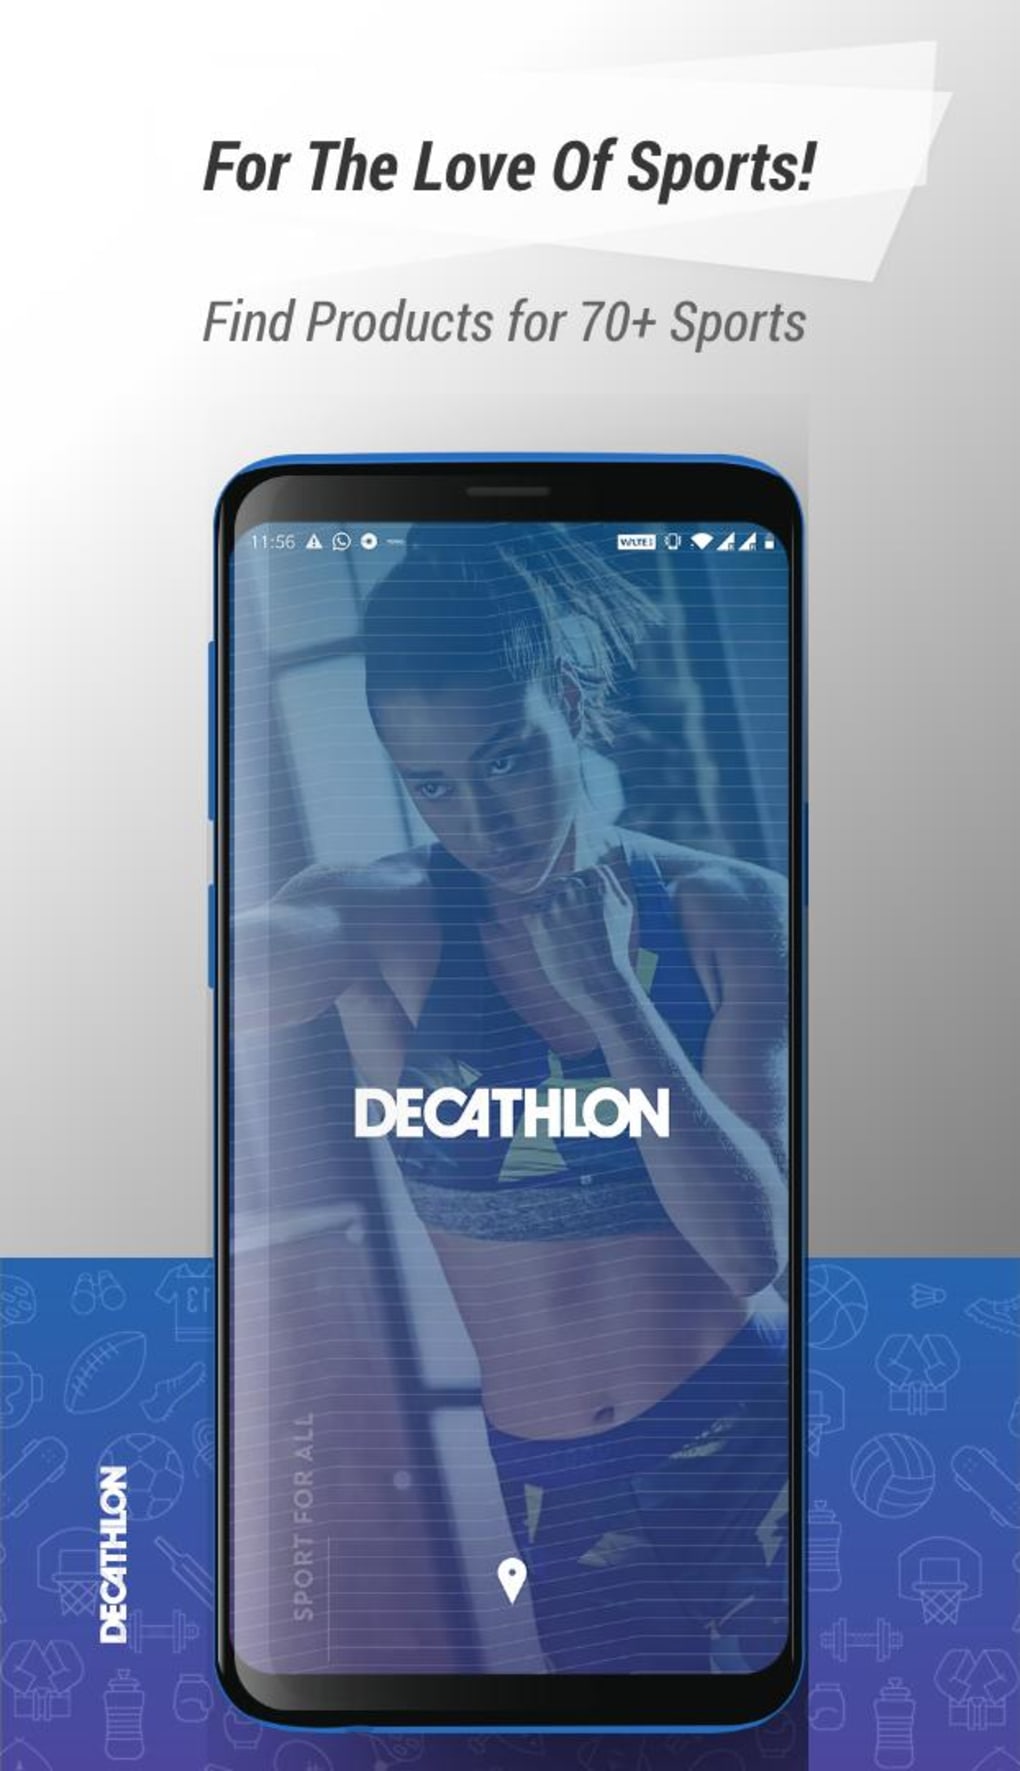 Decathlon lança app de compras